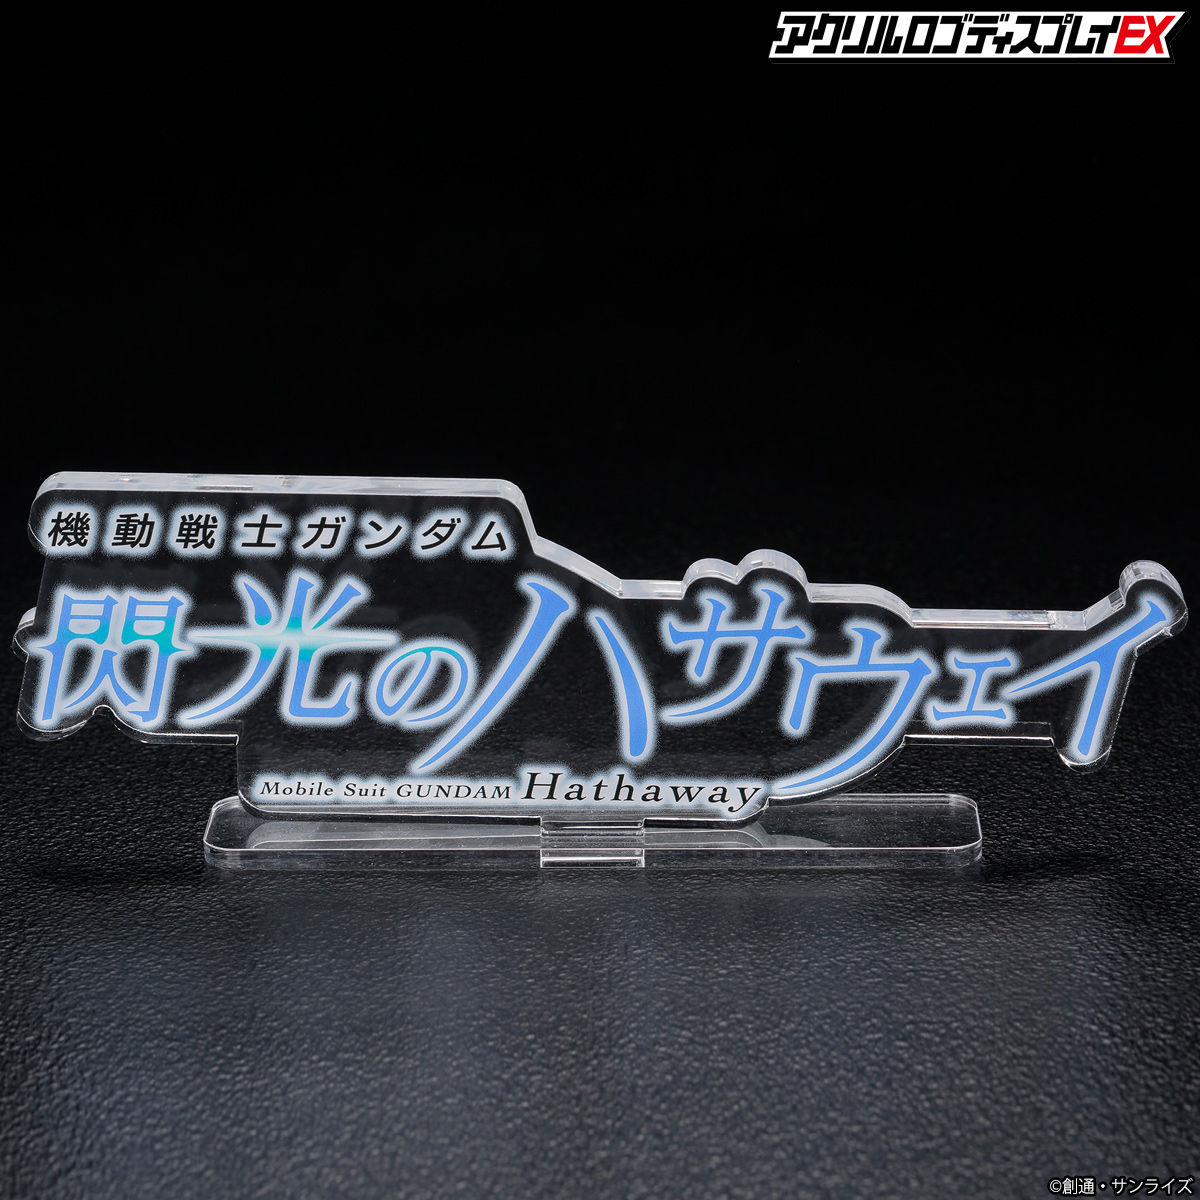 Mega Size of Acrylic Logo Display EX Mobile Suit Gundam Hathaway in Transparent Background